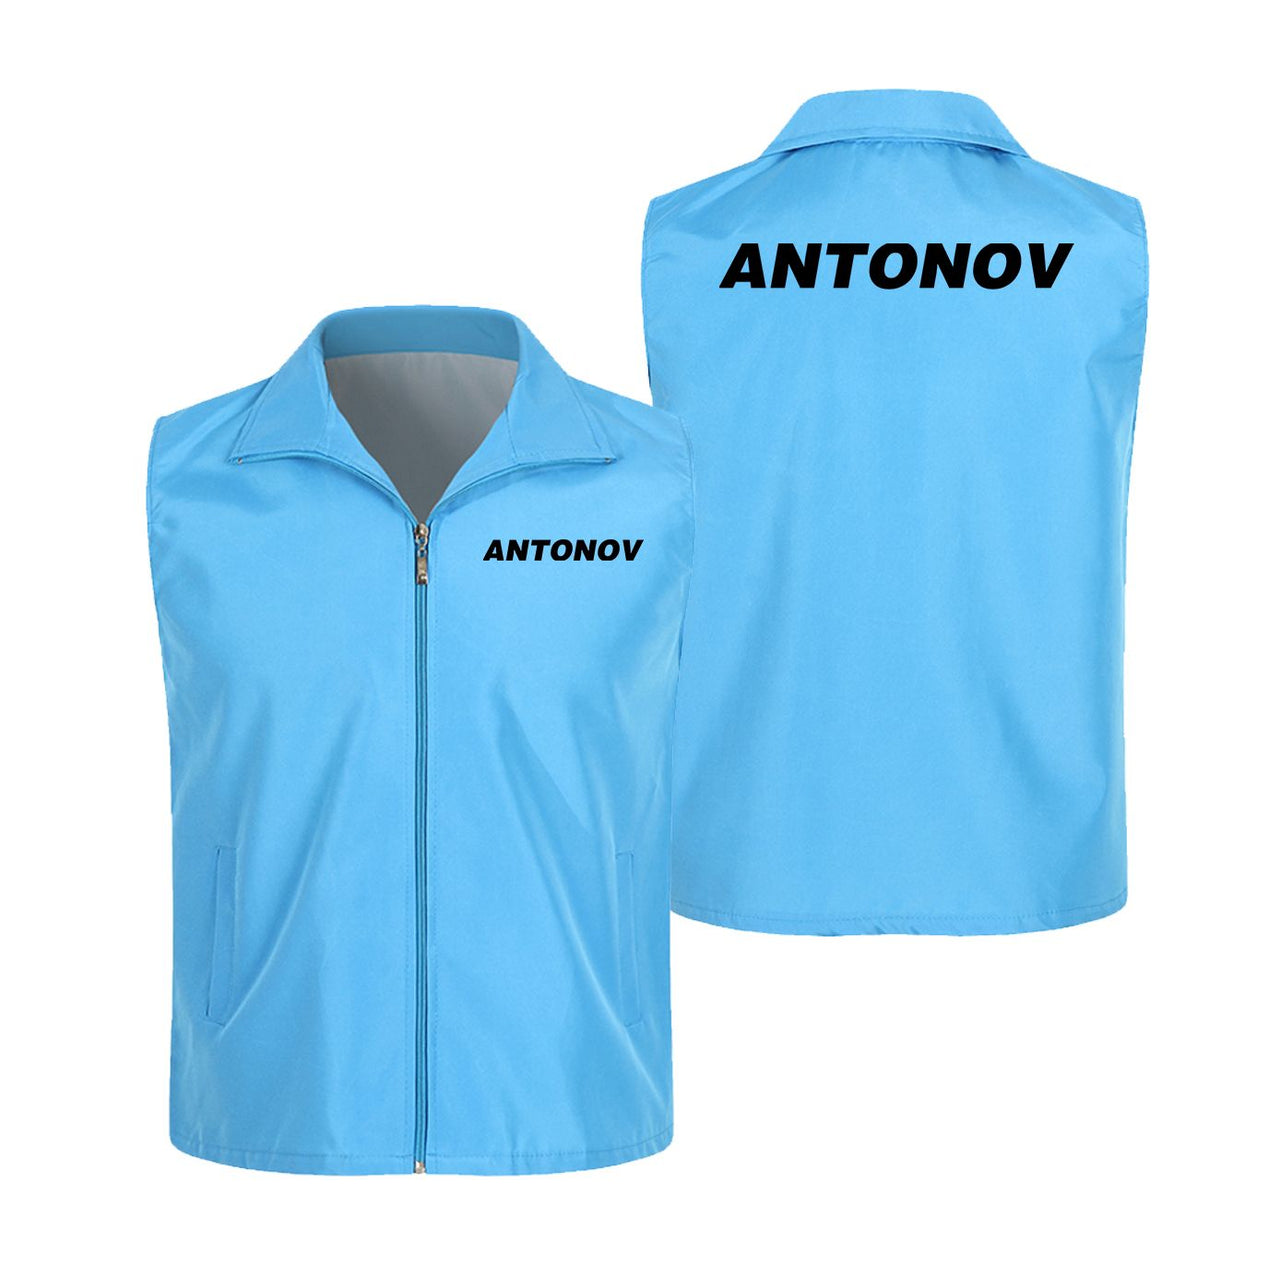 Antonov & Text Designed Thin Style Vests